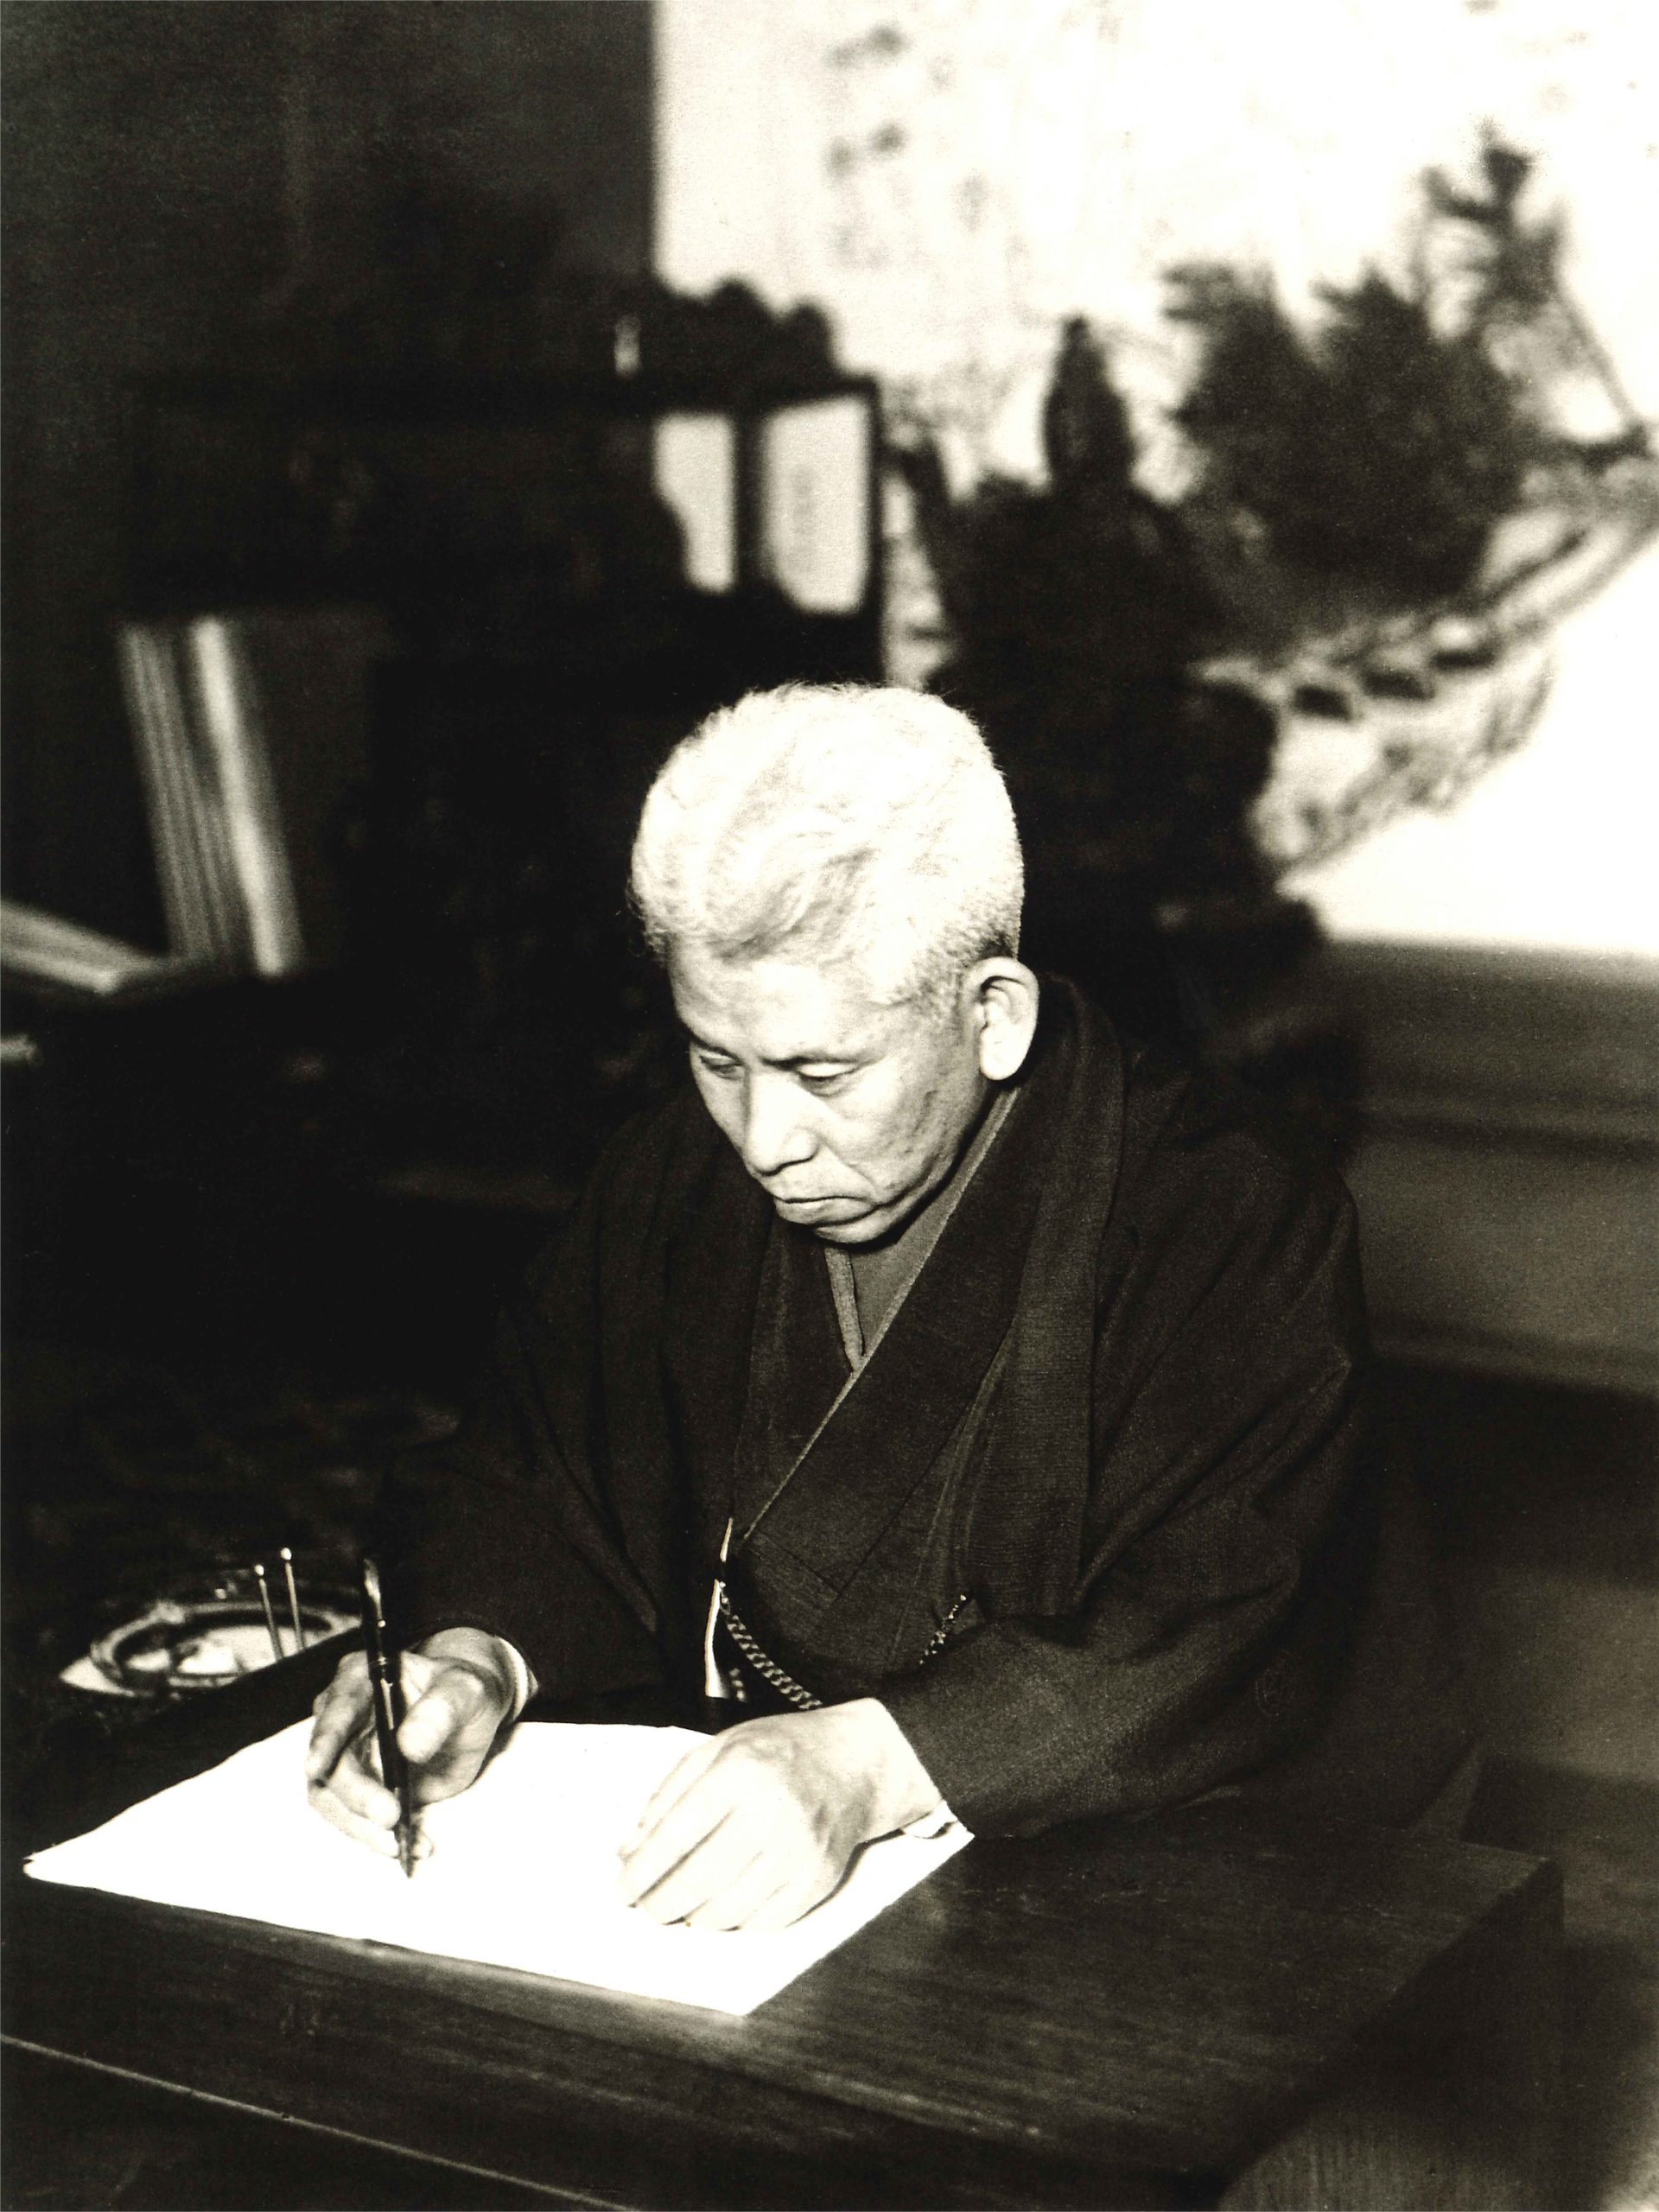 Okada, corrects his manuscript at Ojindo in Tokyo Hanzomon